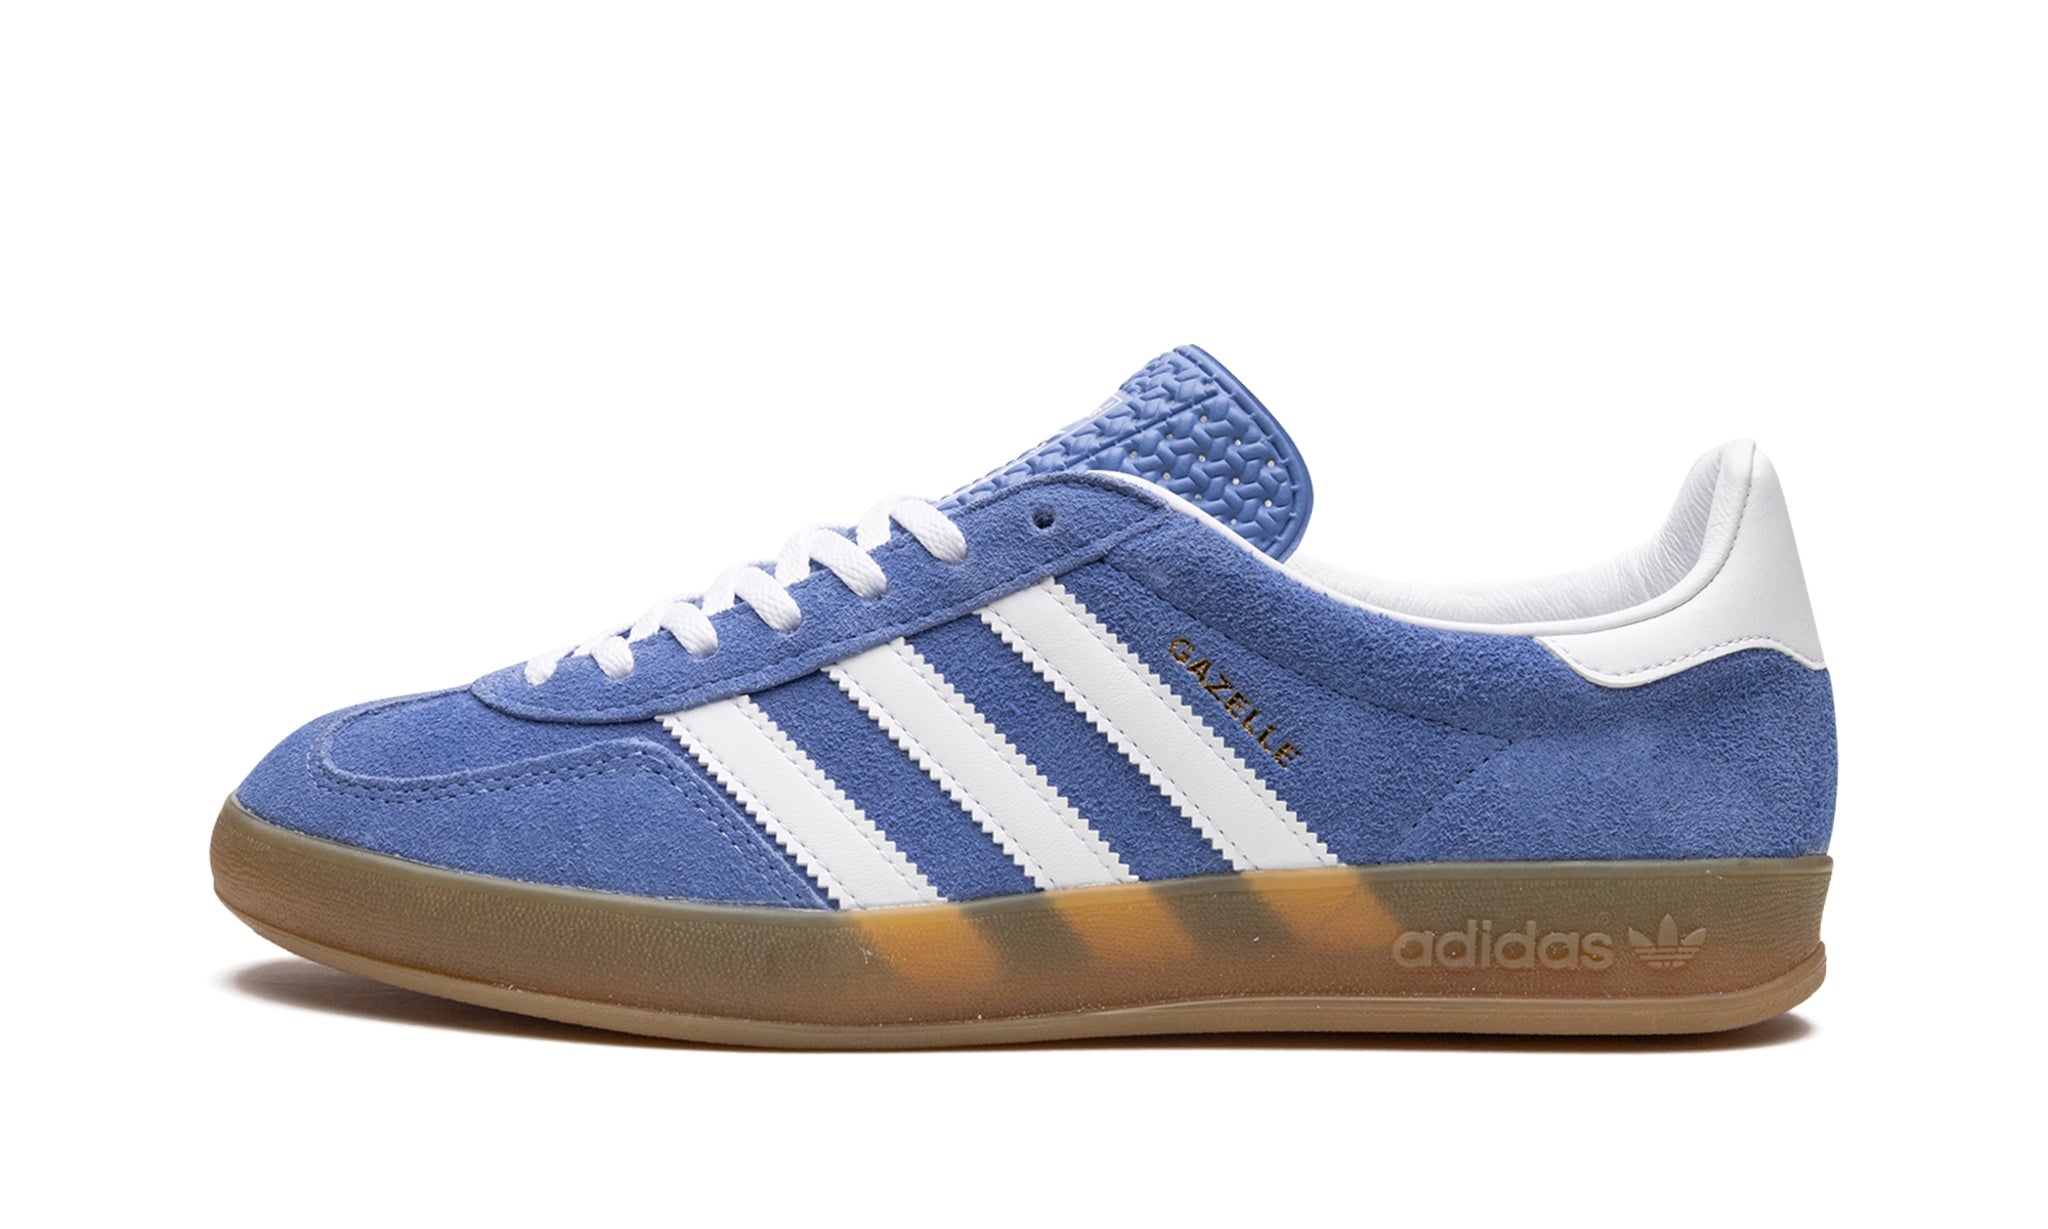 Adidas Gazelle Indoor Blue Fusion Gum - HQ8717 - Sneakers